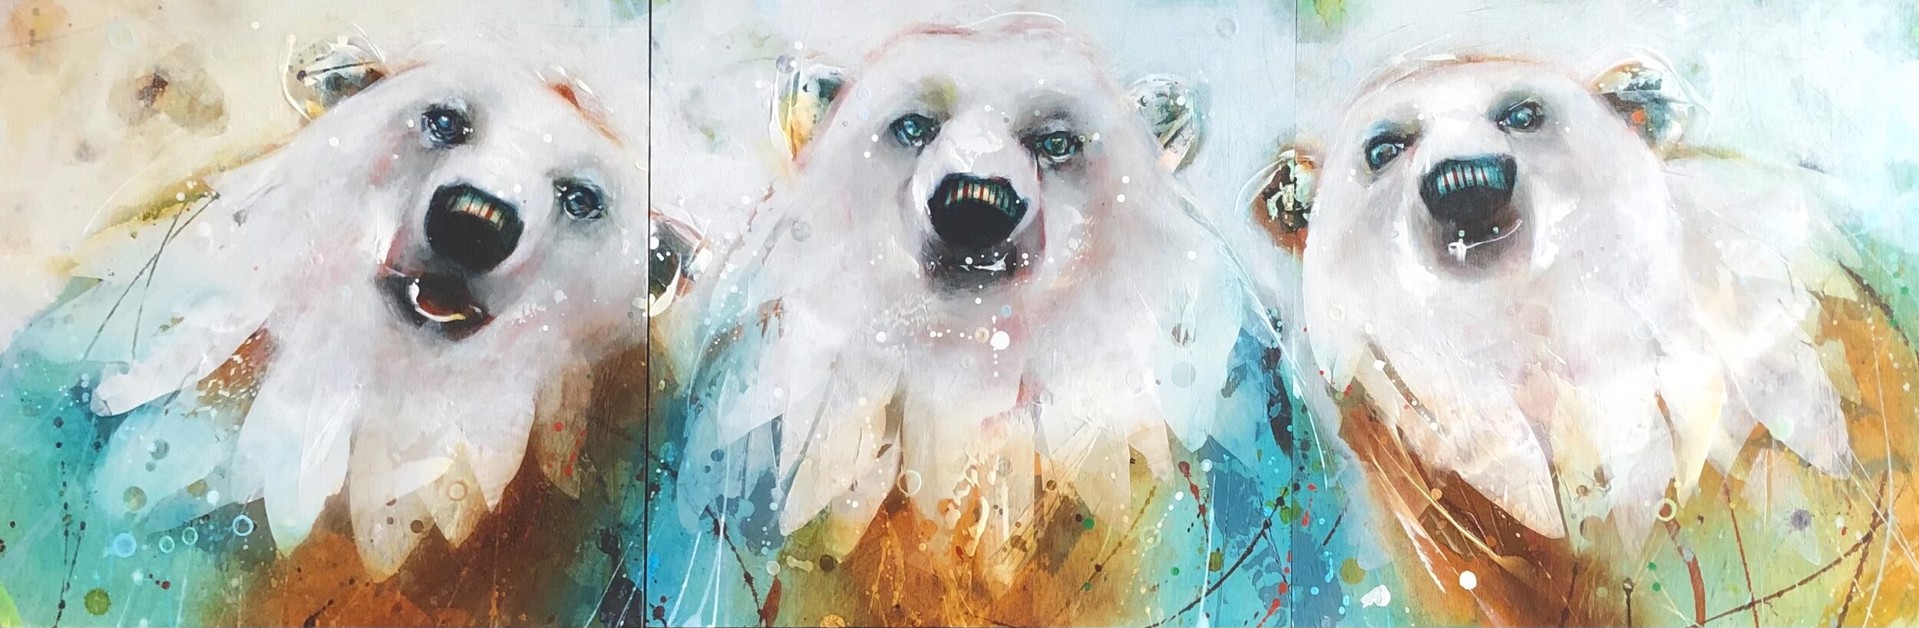 Celebration of Polar Bears - Triptych by Fran Alexander